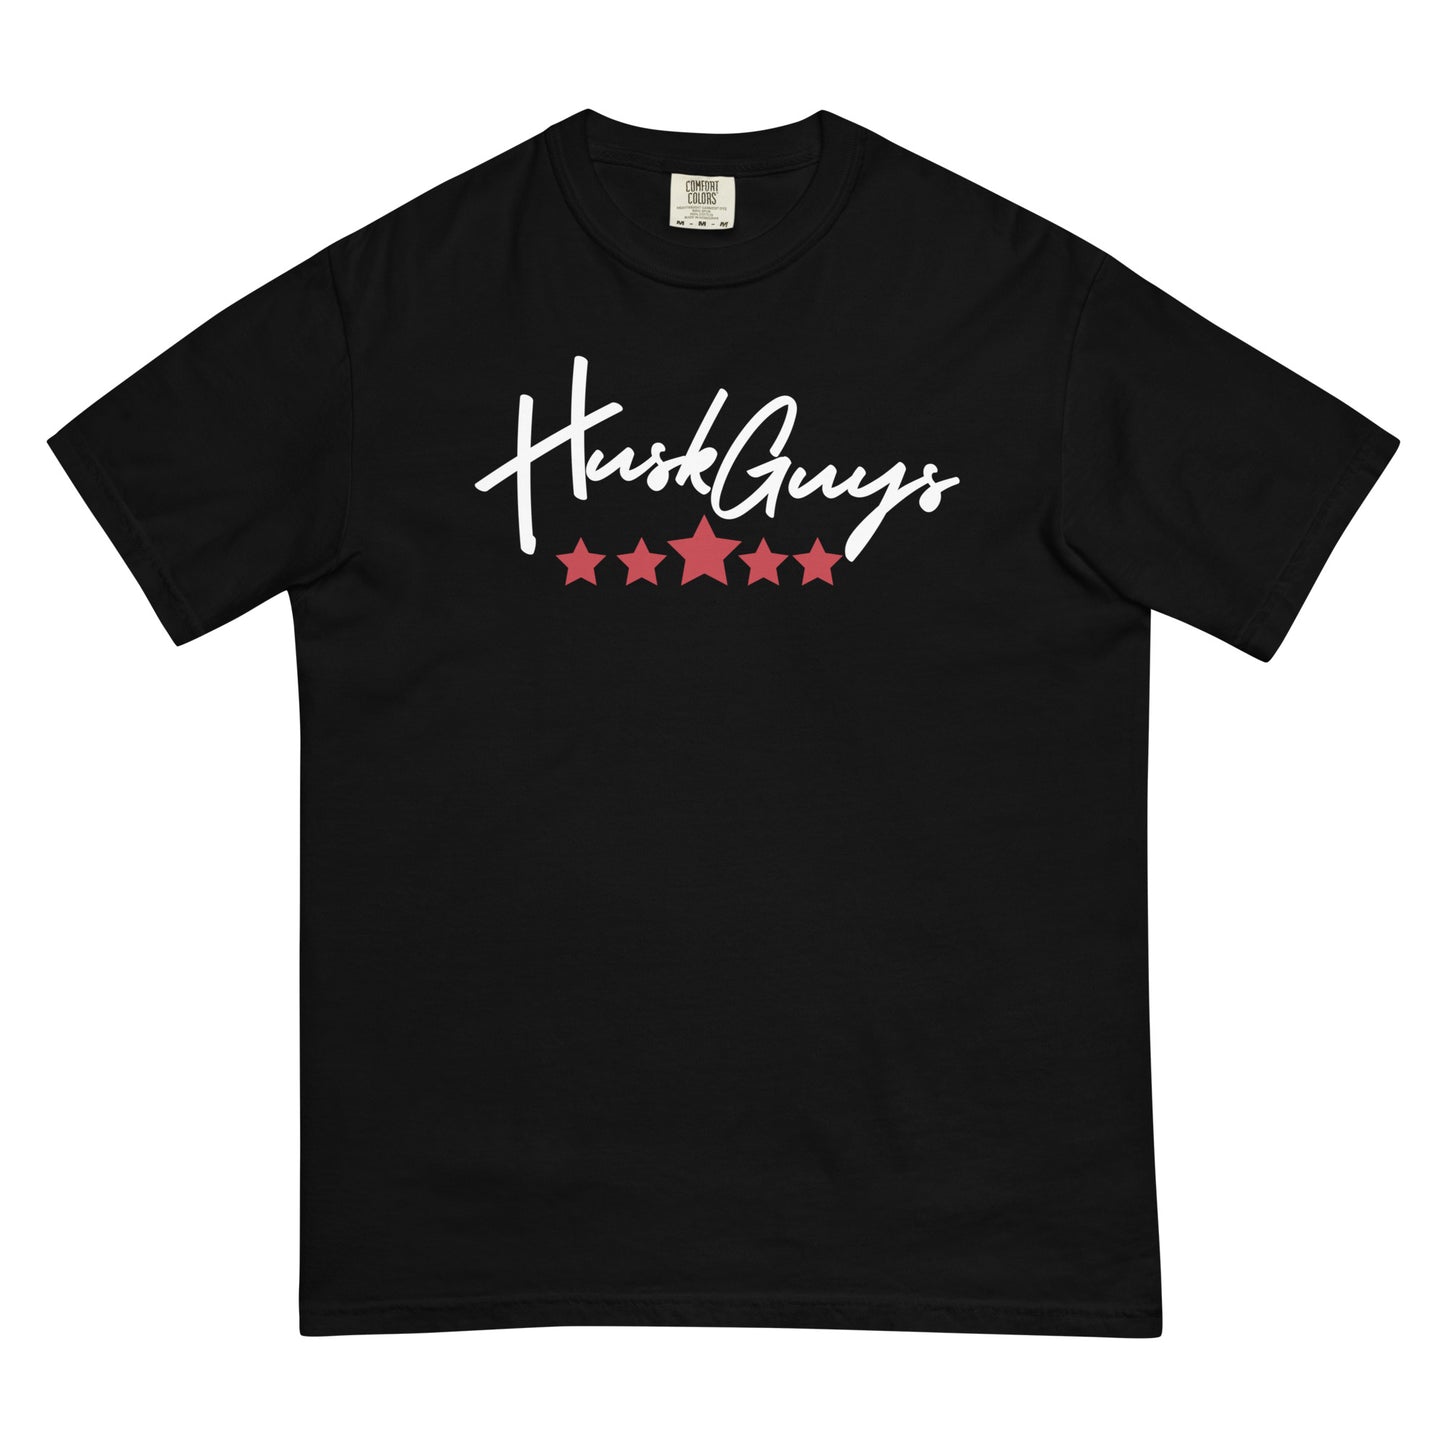 HuskGuys T-shirt